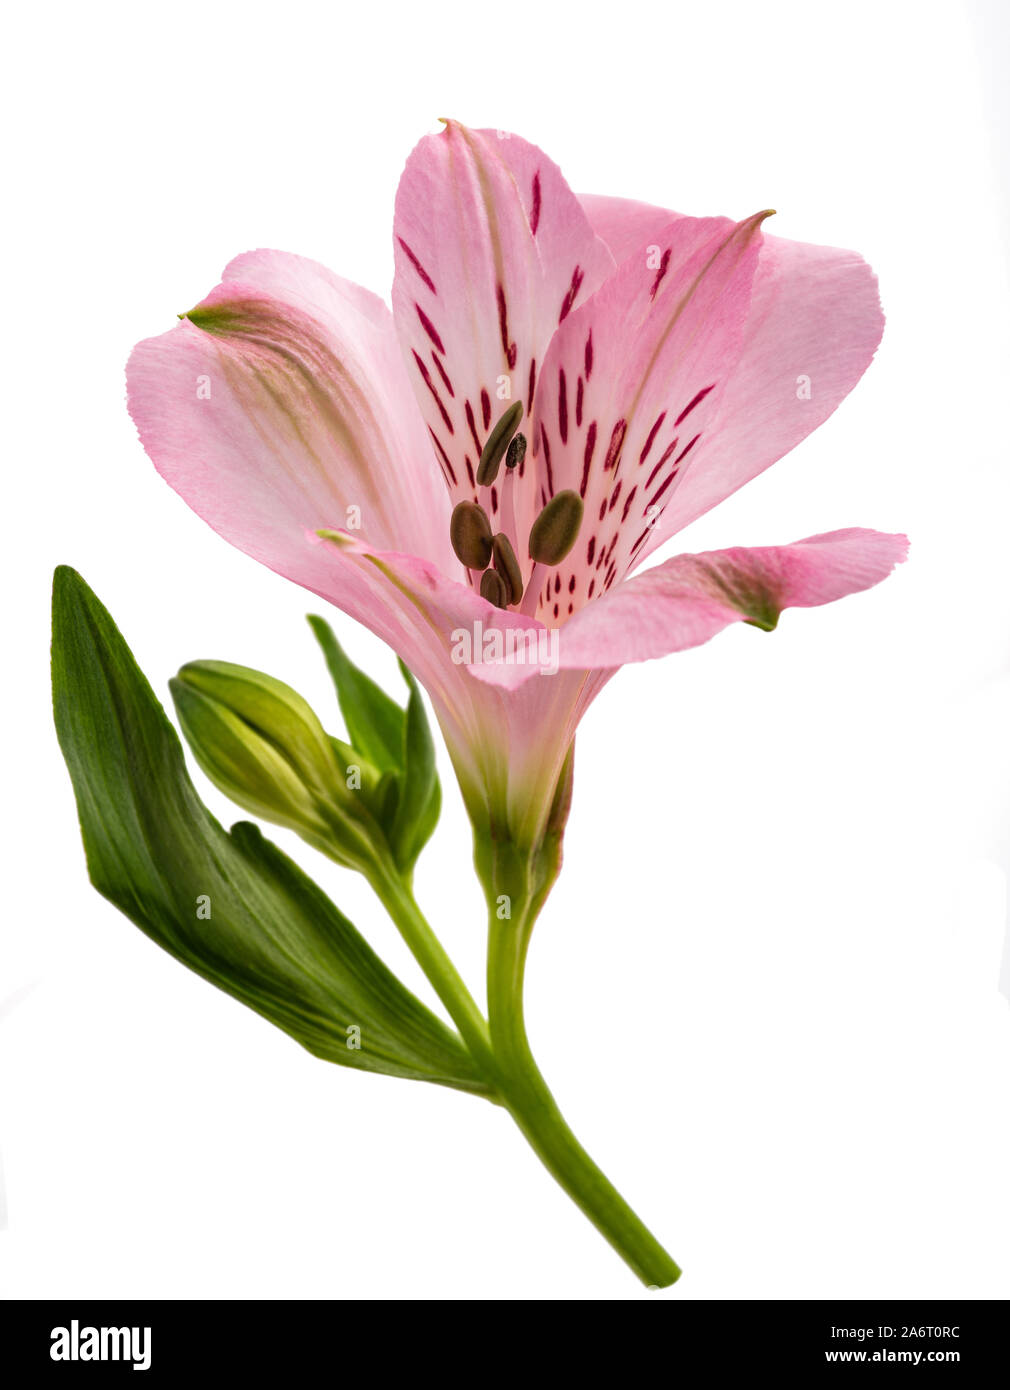 Peruvian lily ( Alstroemeria ) isolated on white background Stock Photo